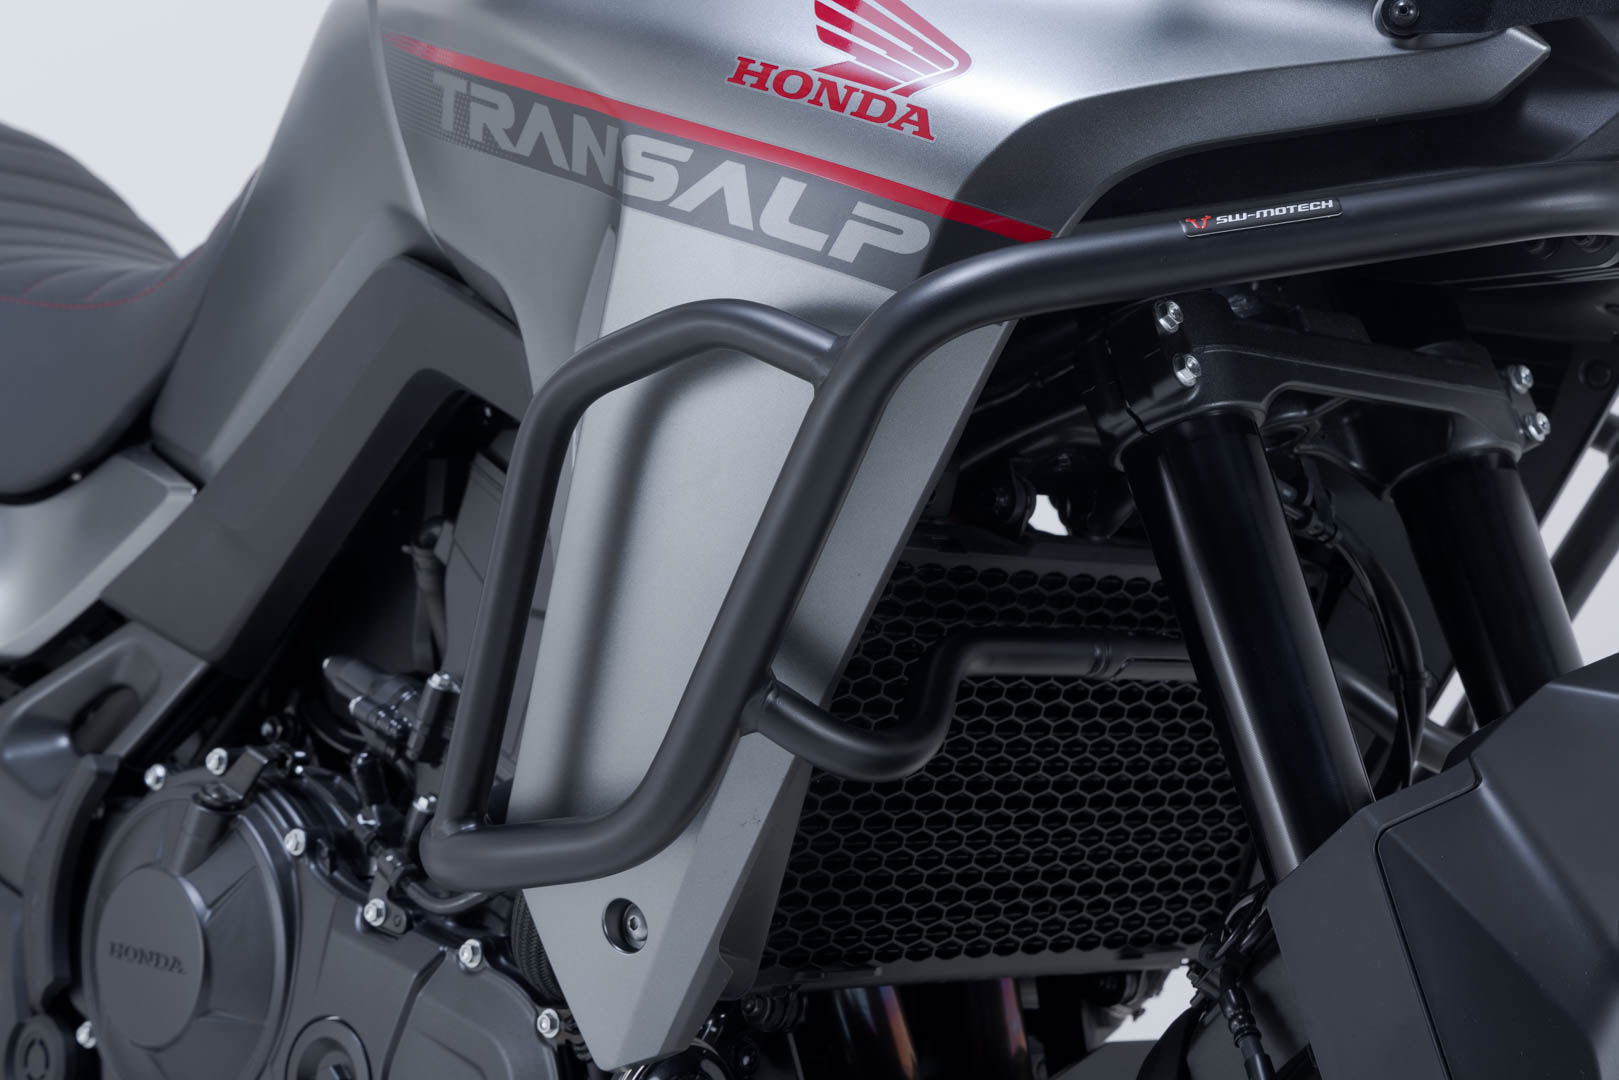 Barra di protezione motore Nero. Honda XL750 Transalp (22-).